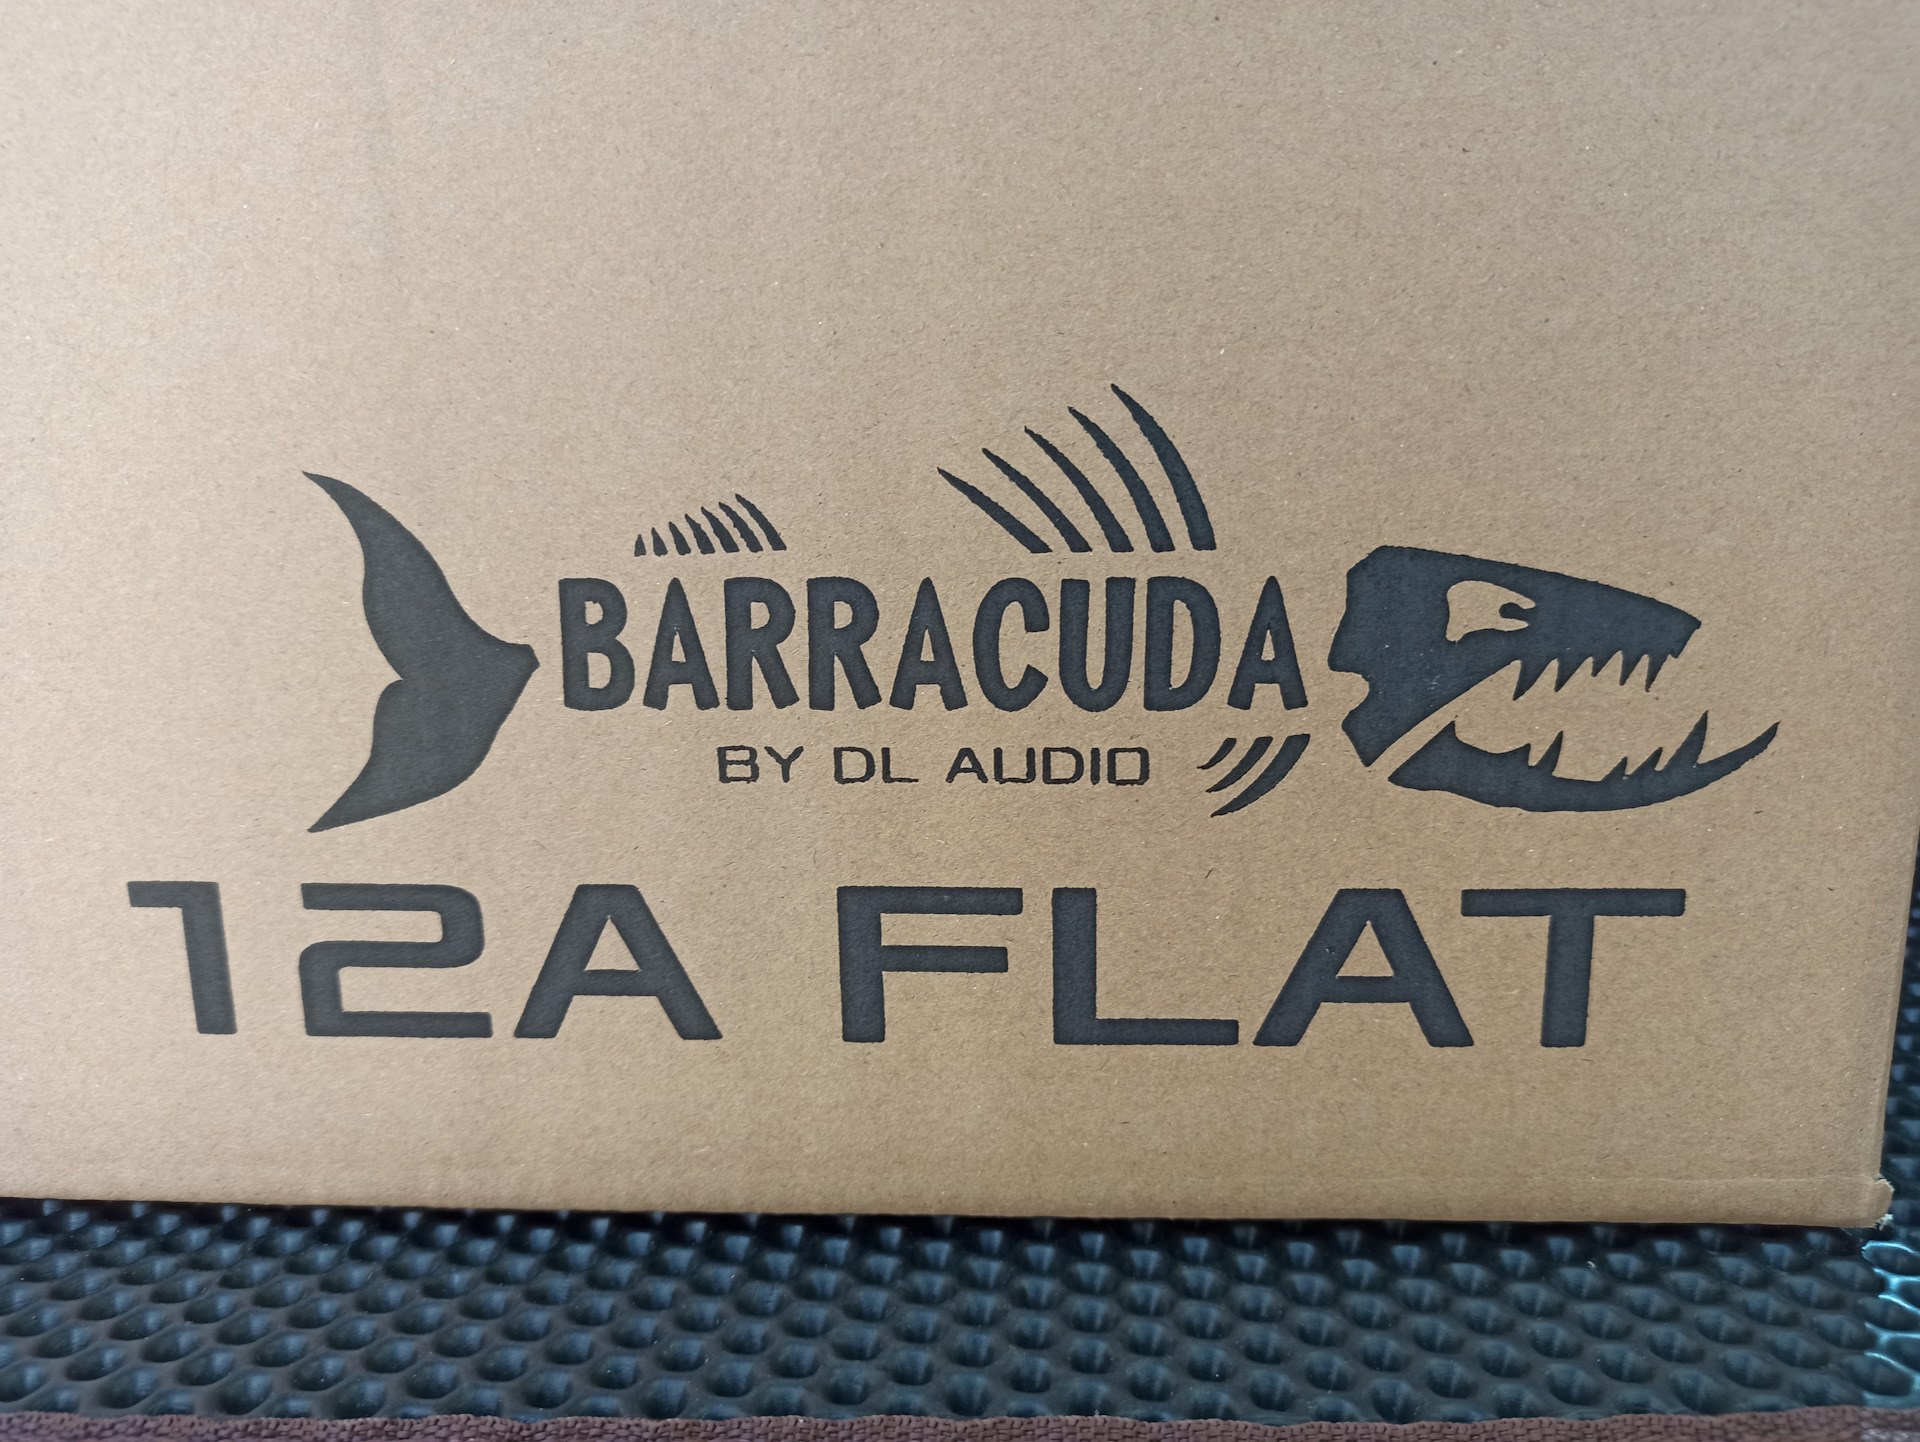 Barracuda 10 flat. Барракуда 12а Флат. DL Audio Barracuda 12a Flat. DL Audio Barracuda. Barracuda Flat Design.